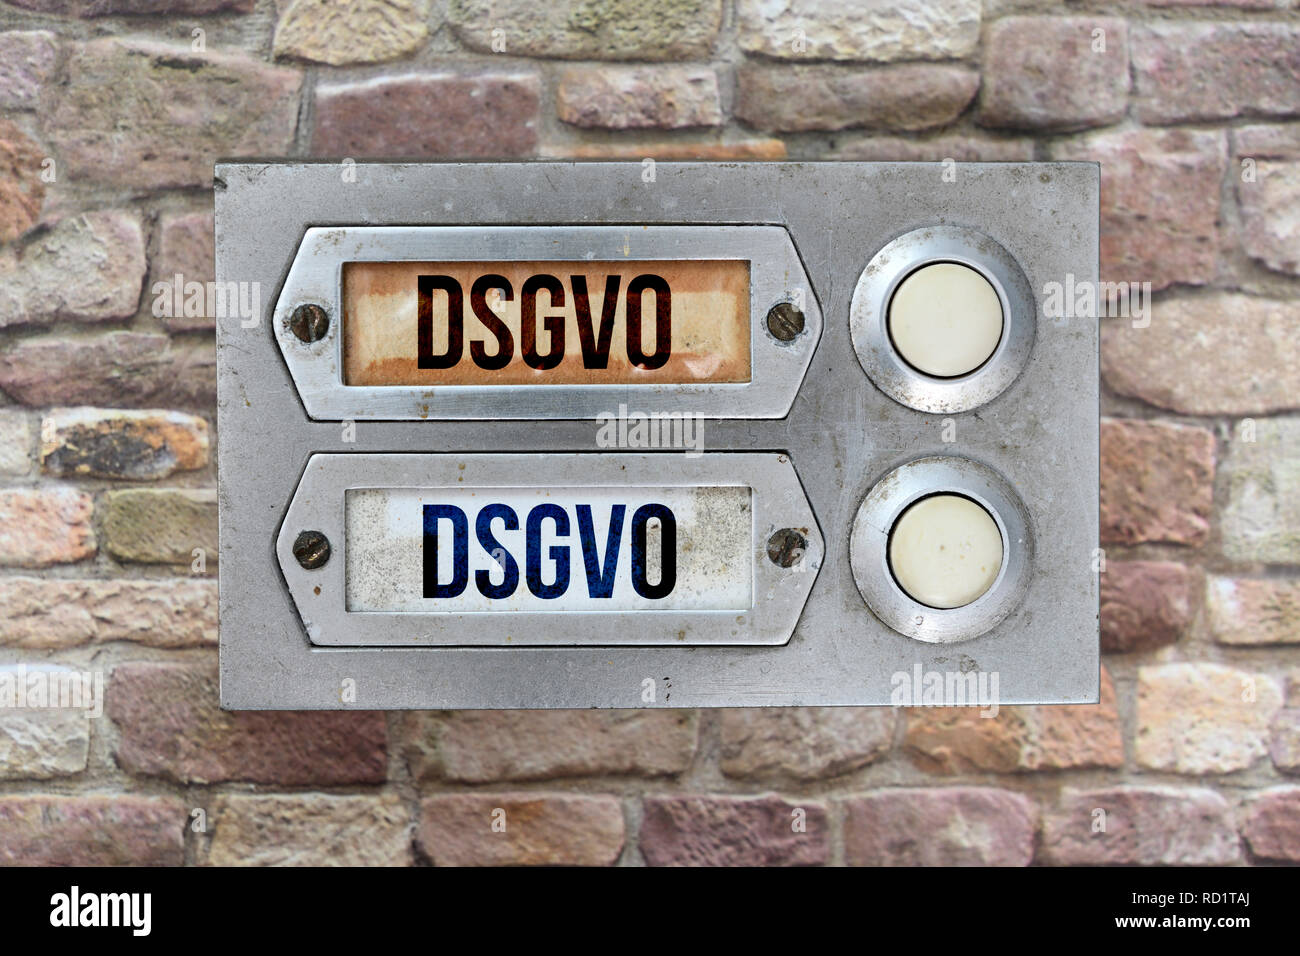 Segno di campana con etichetta DSGVO, Klingelschild mit Aufschrift DSGVO Foto Stock